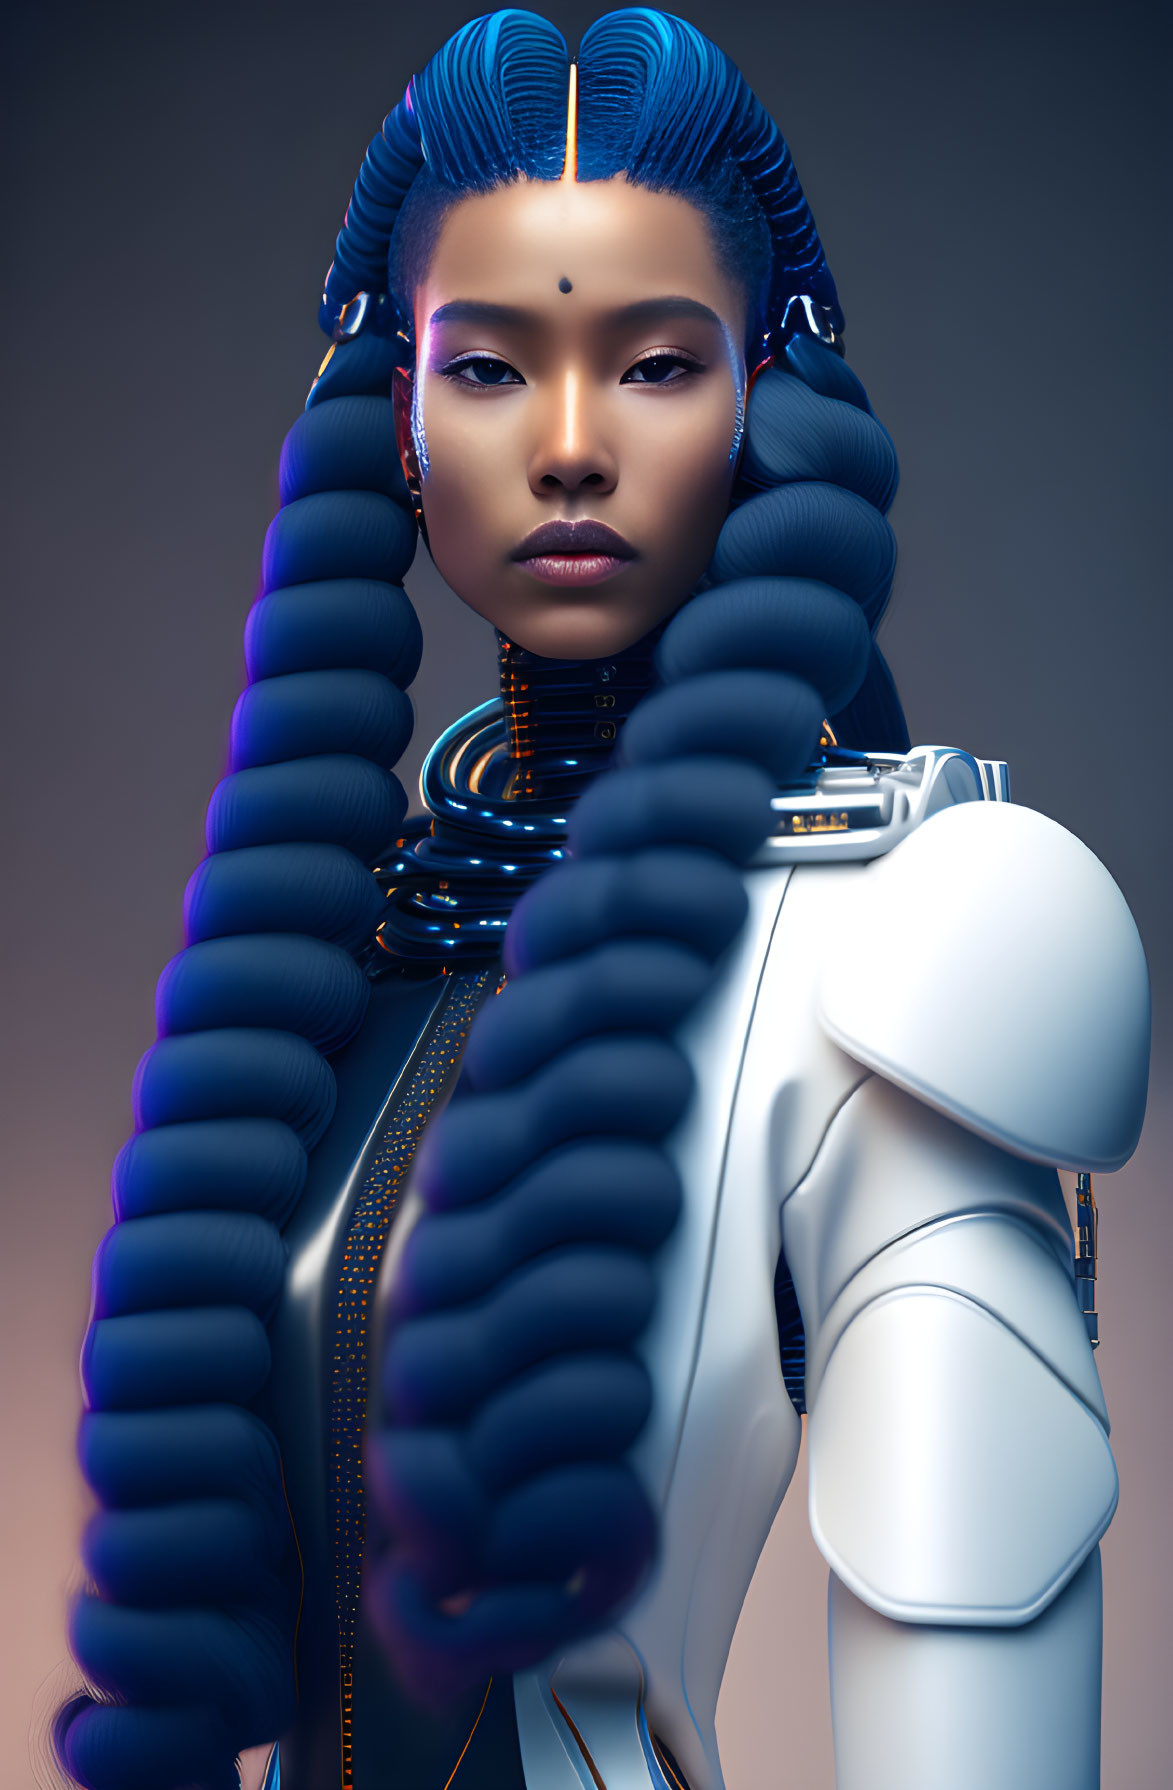 Futuristic woman with blue braids and robotic attire